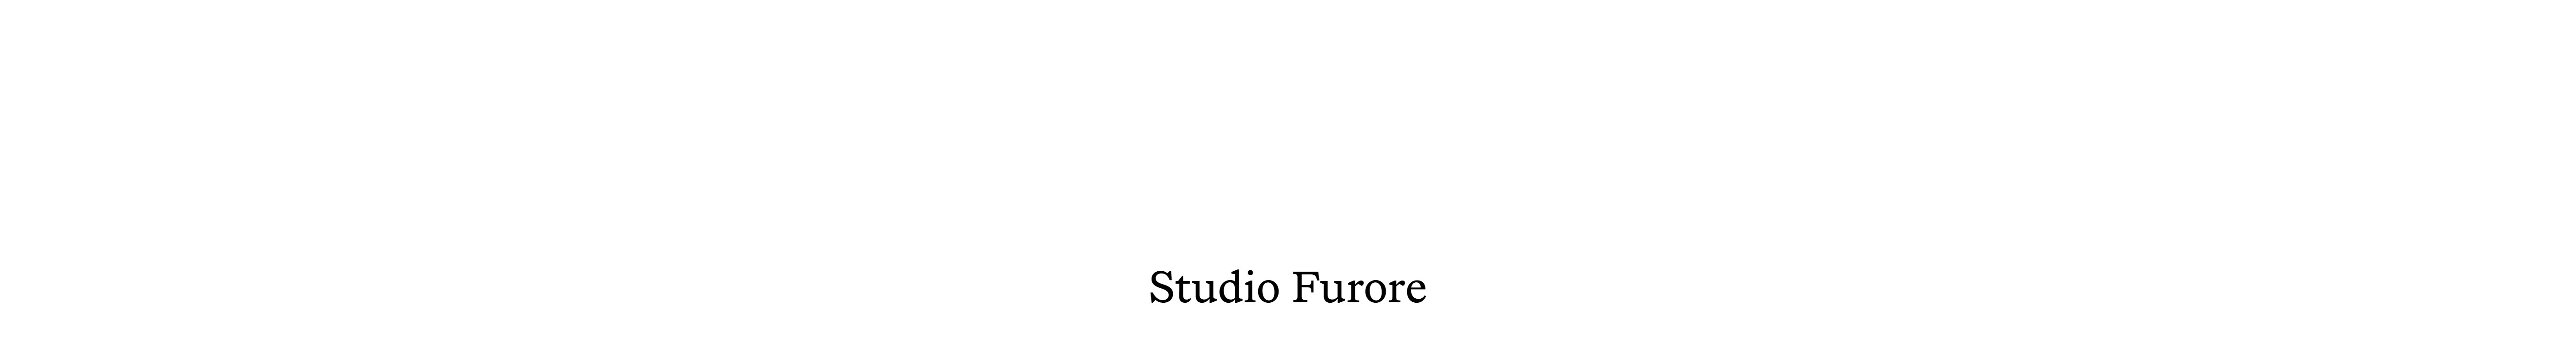 Banner profilu uživatele Studio Furore